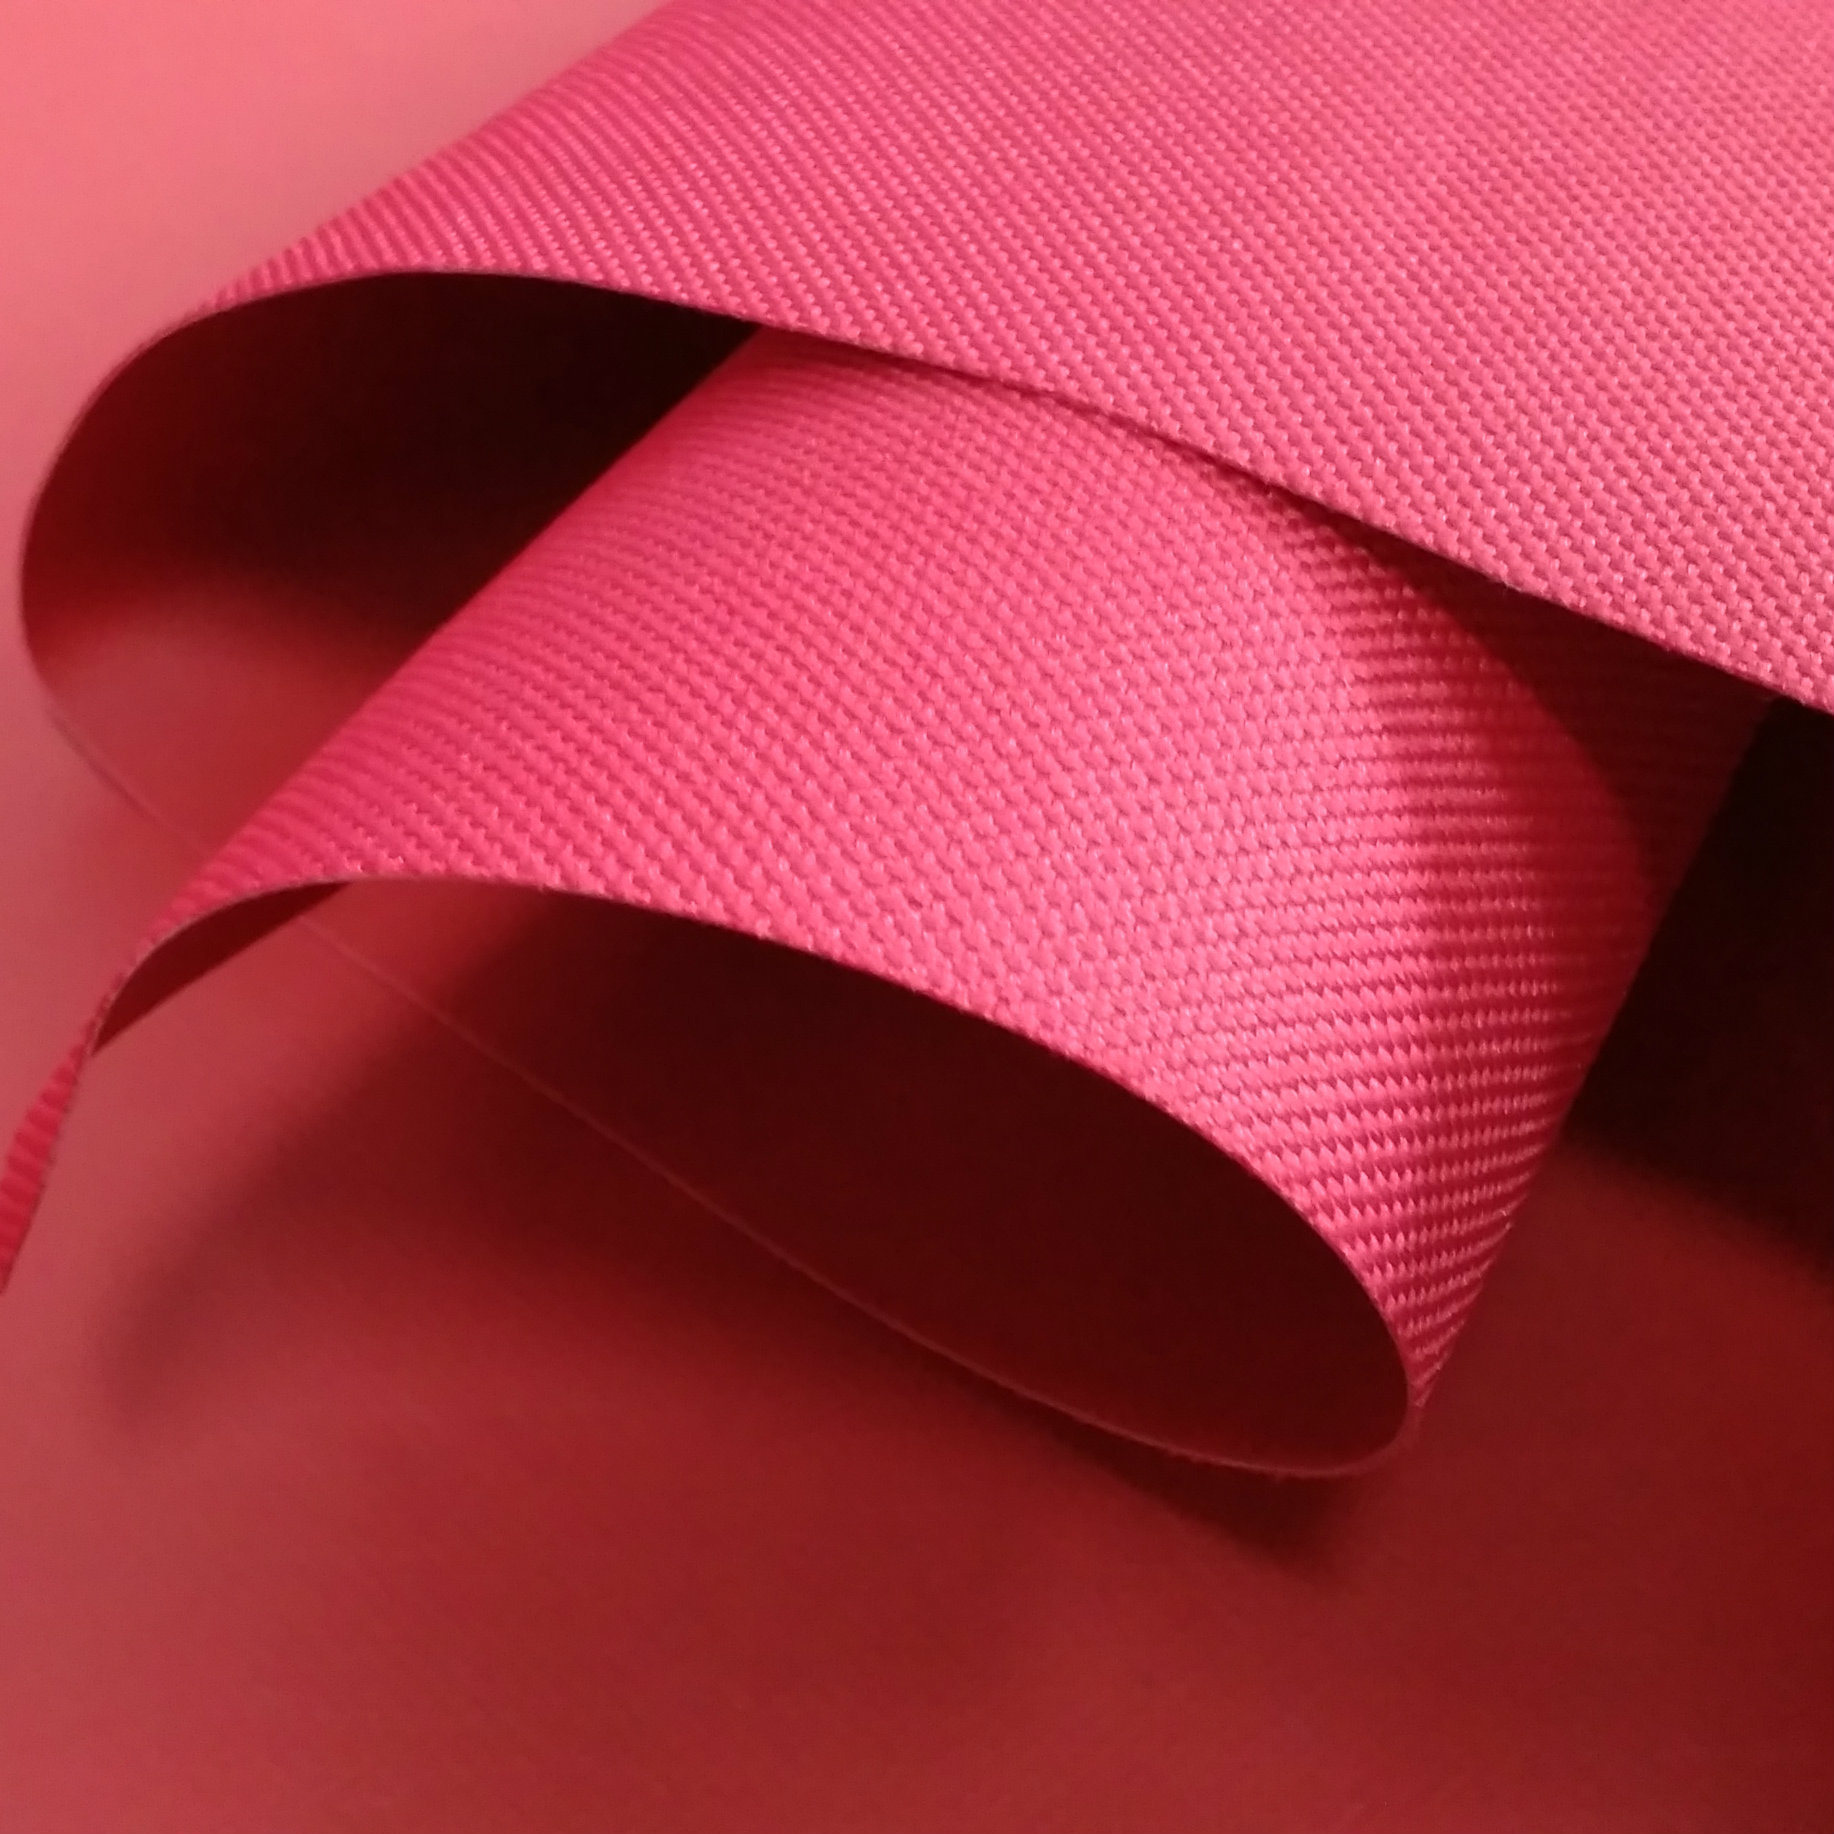 Kodura Fabric, 600Dx300D PVC, 059, weight 350g/m², width 150cm. Price per roll 10m, VAT incl. 